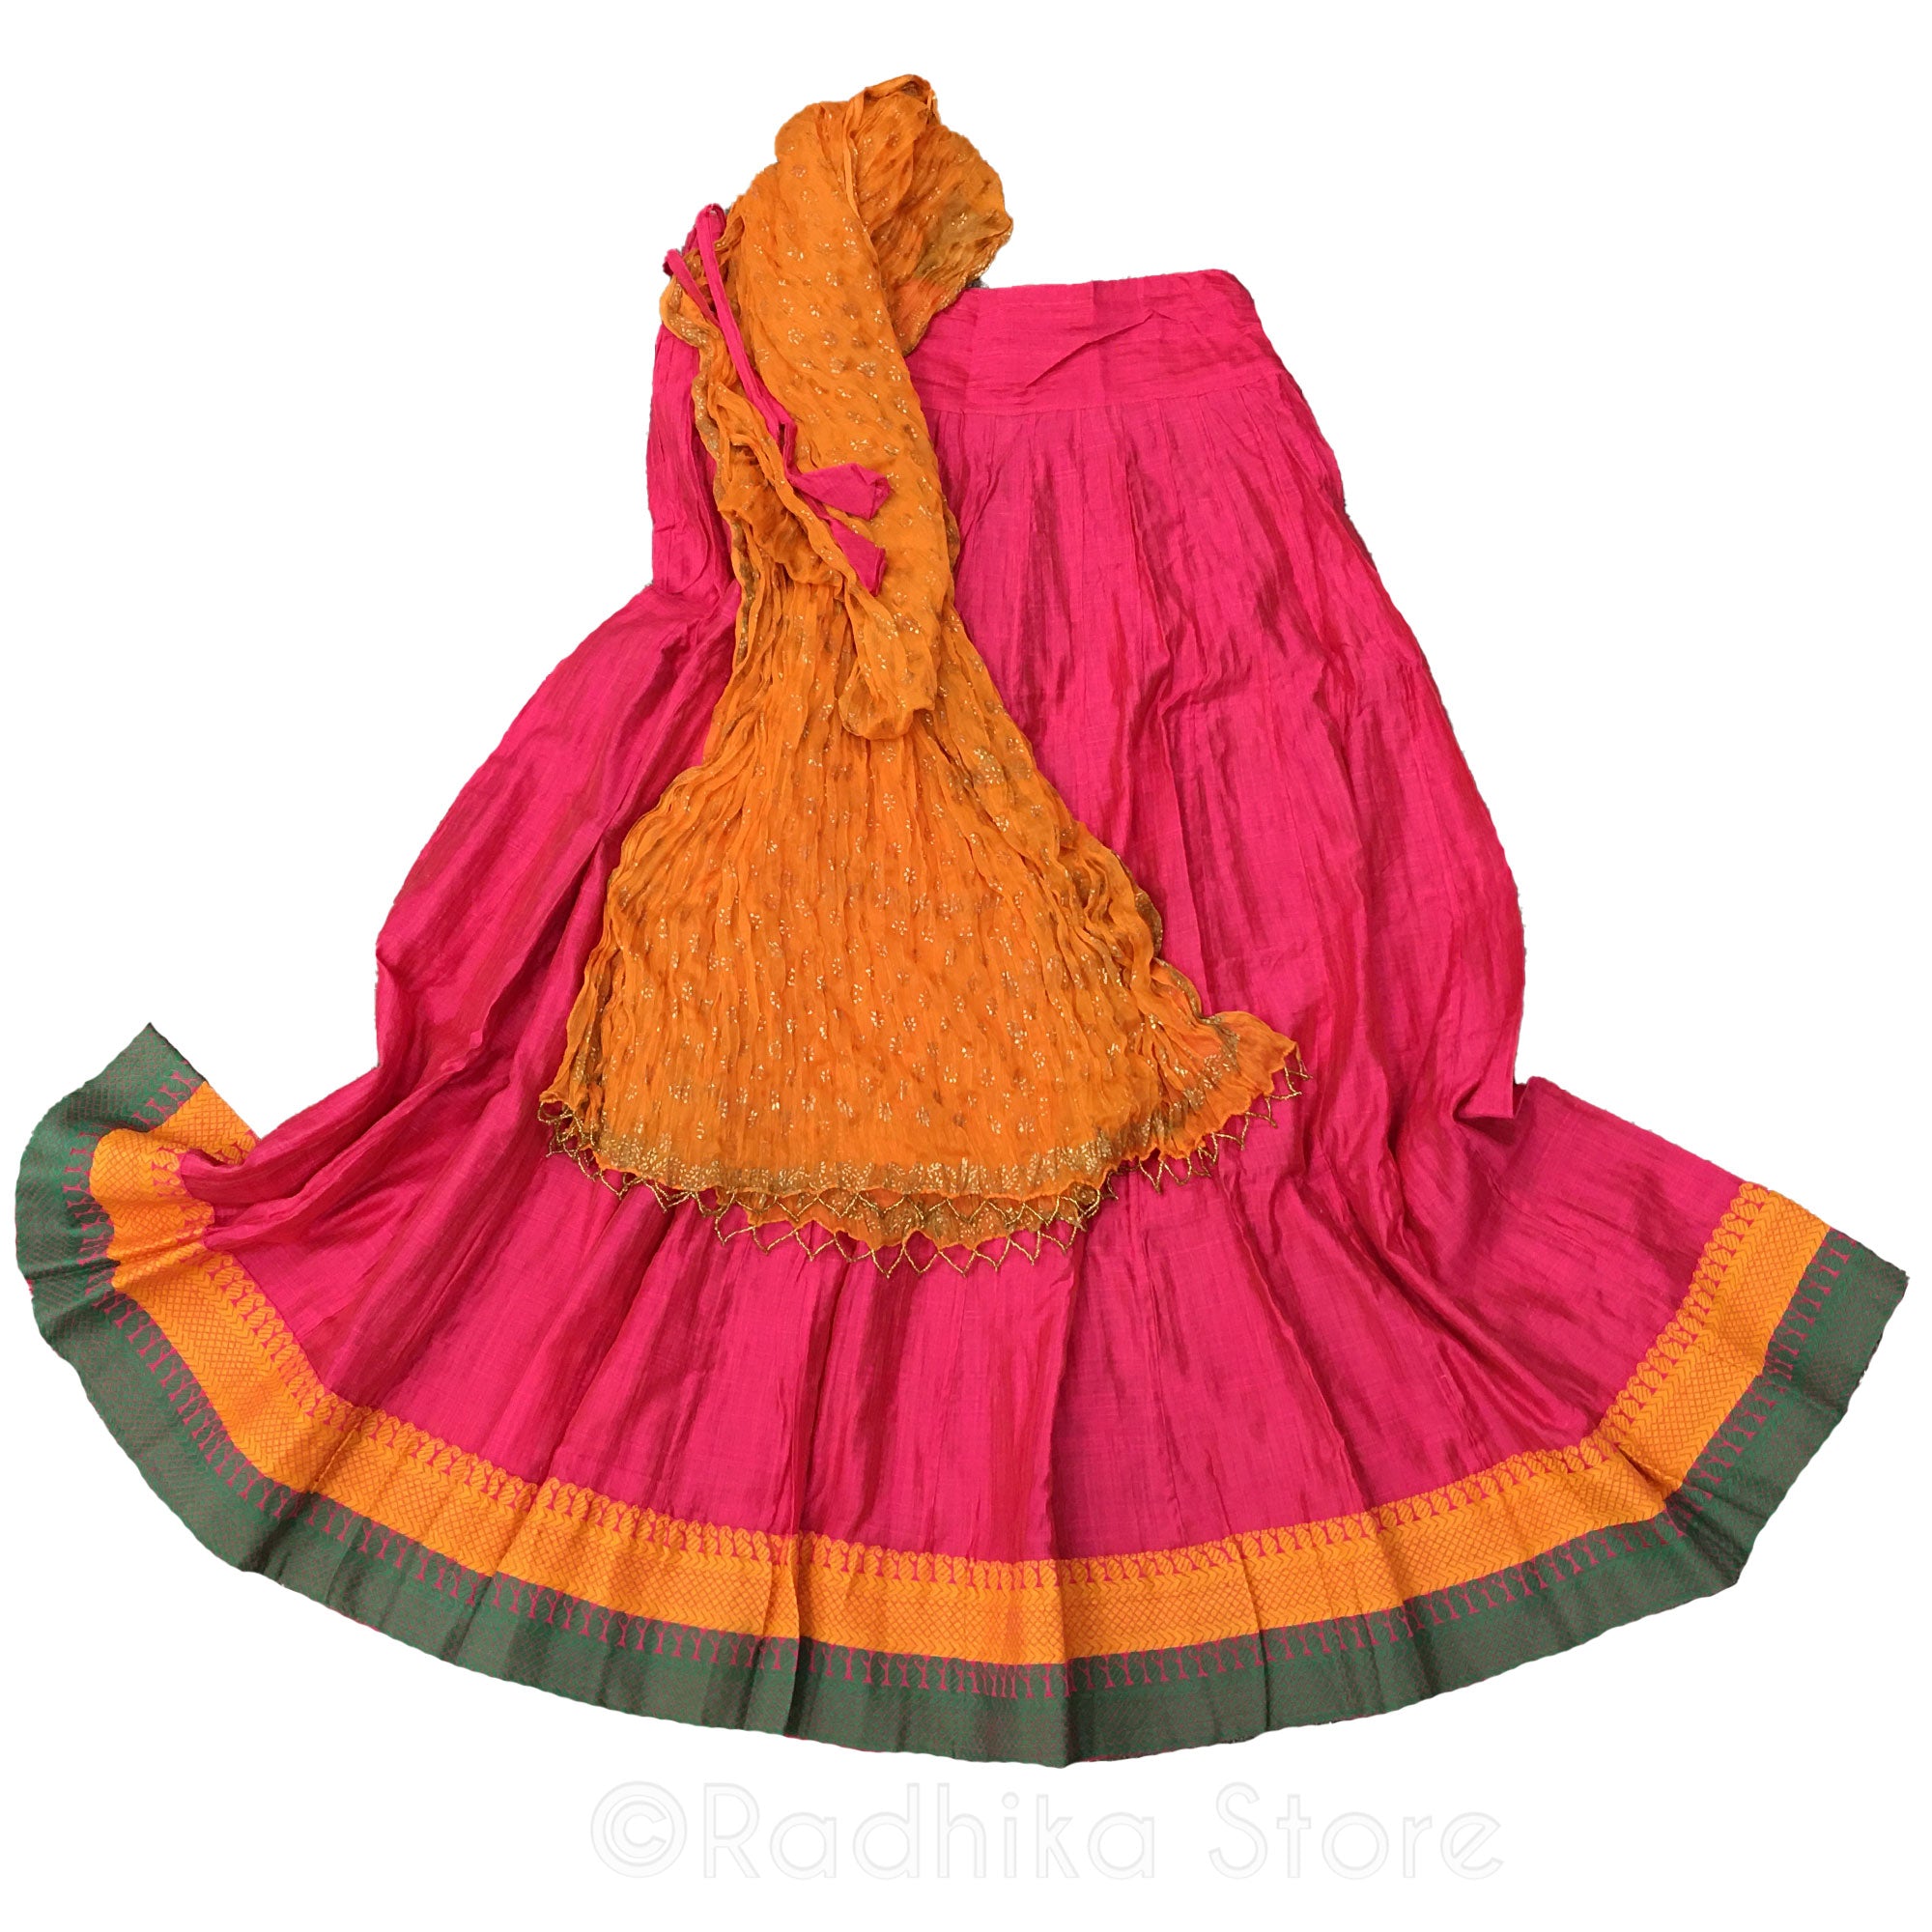 Rani Pink Chandrika Festival - Gopi Skirt - Jute-Cotton- With Turmeric Color Chadar - Small